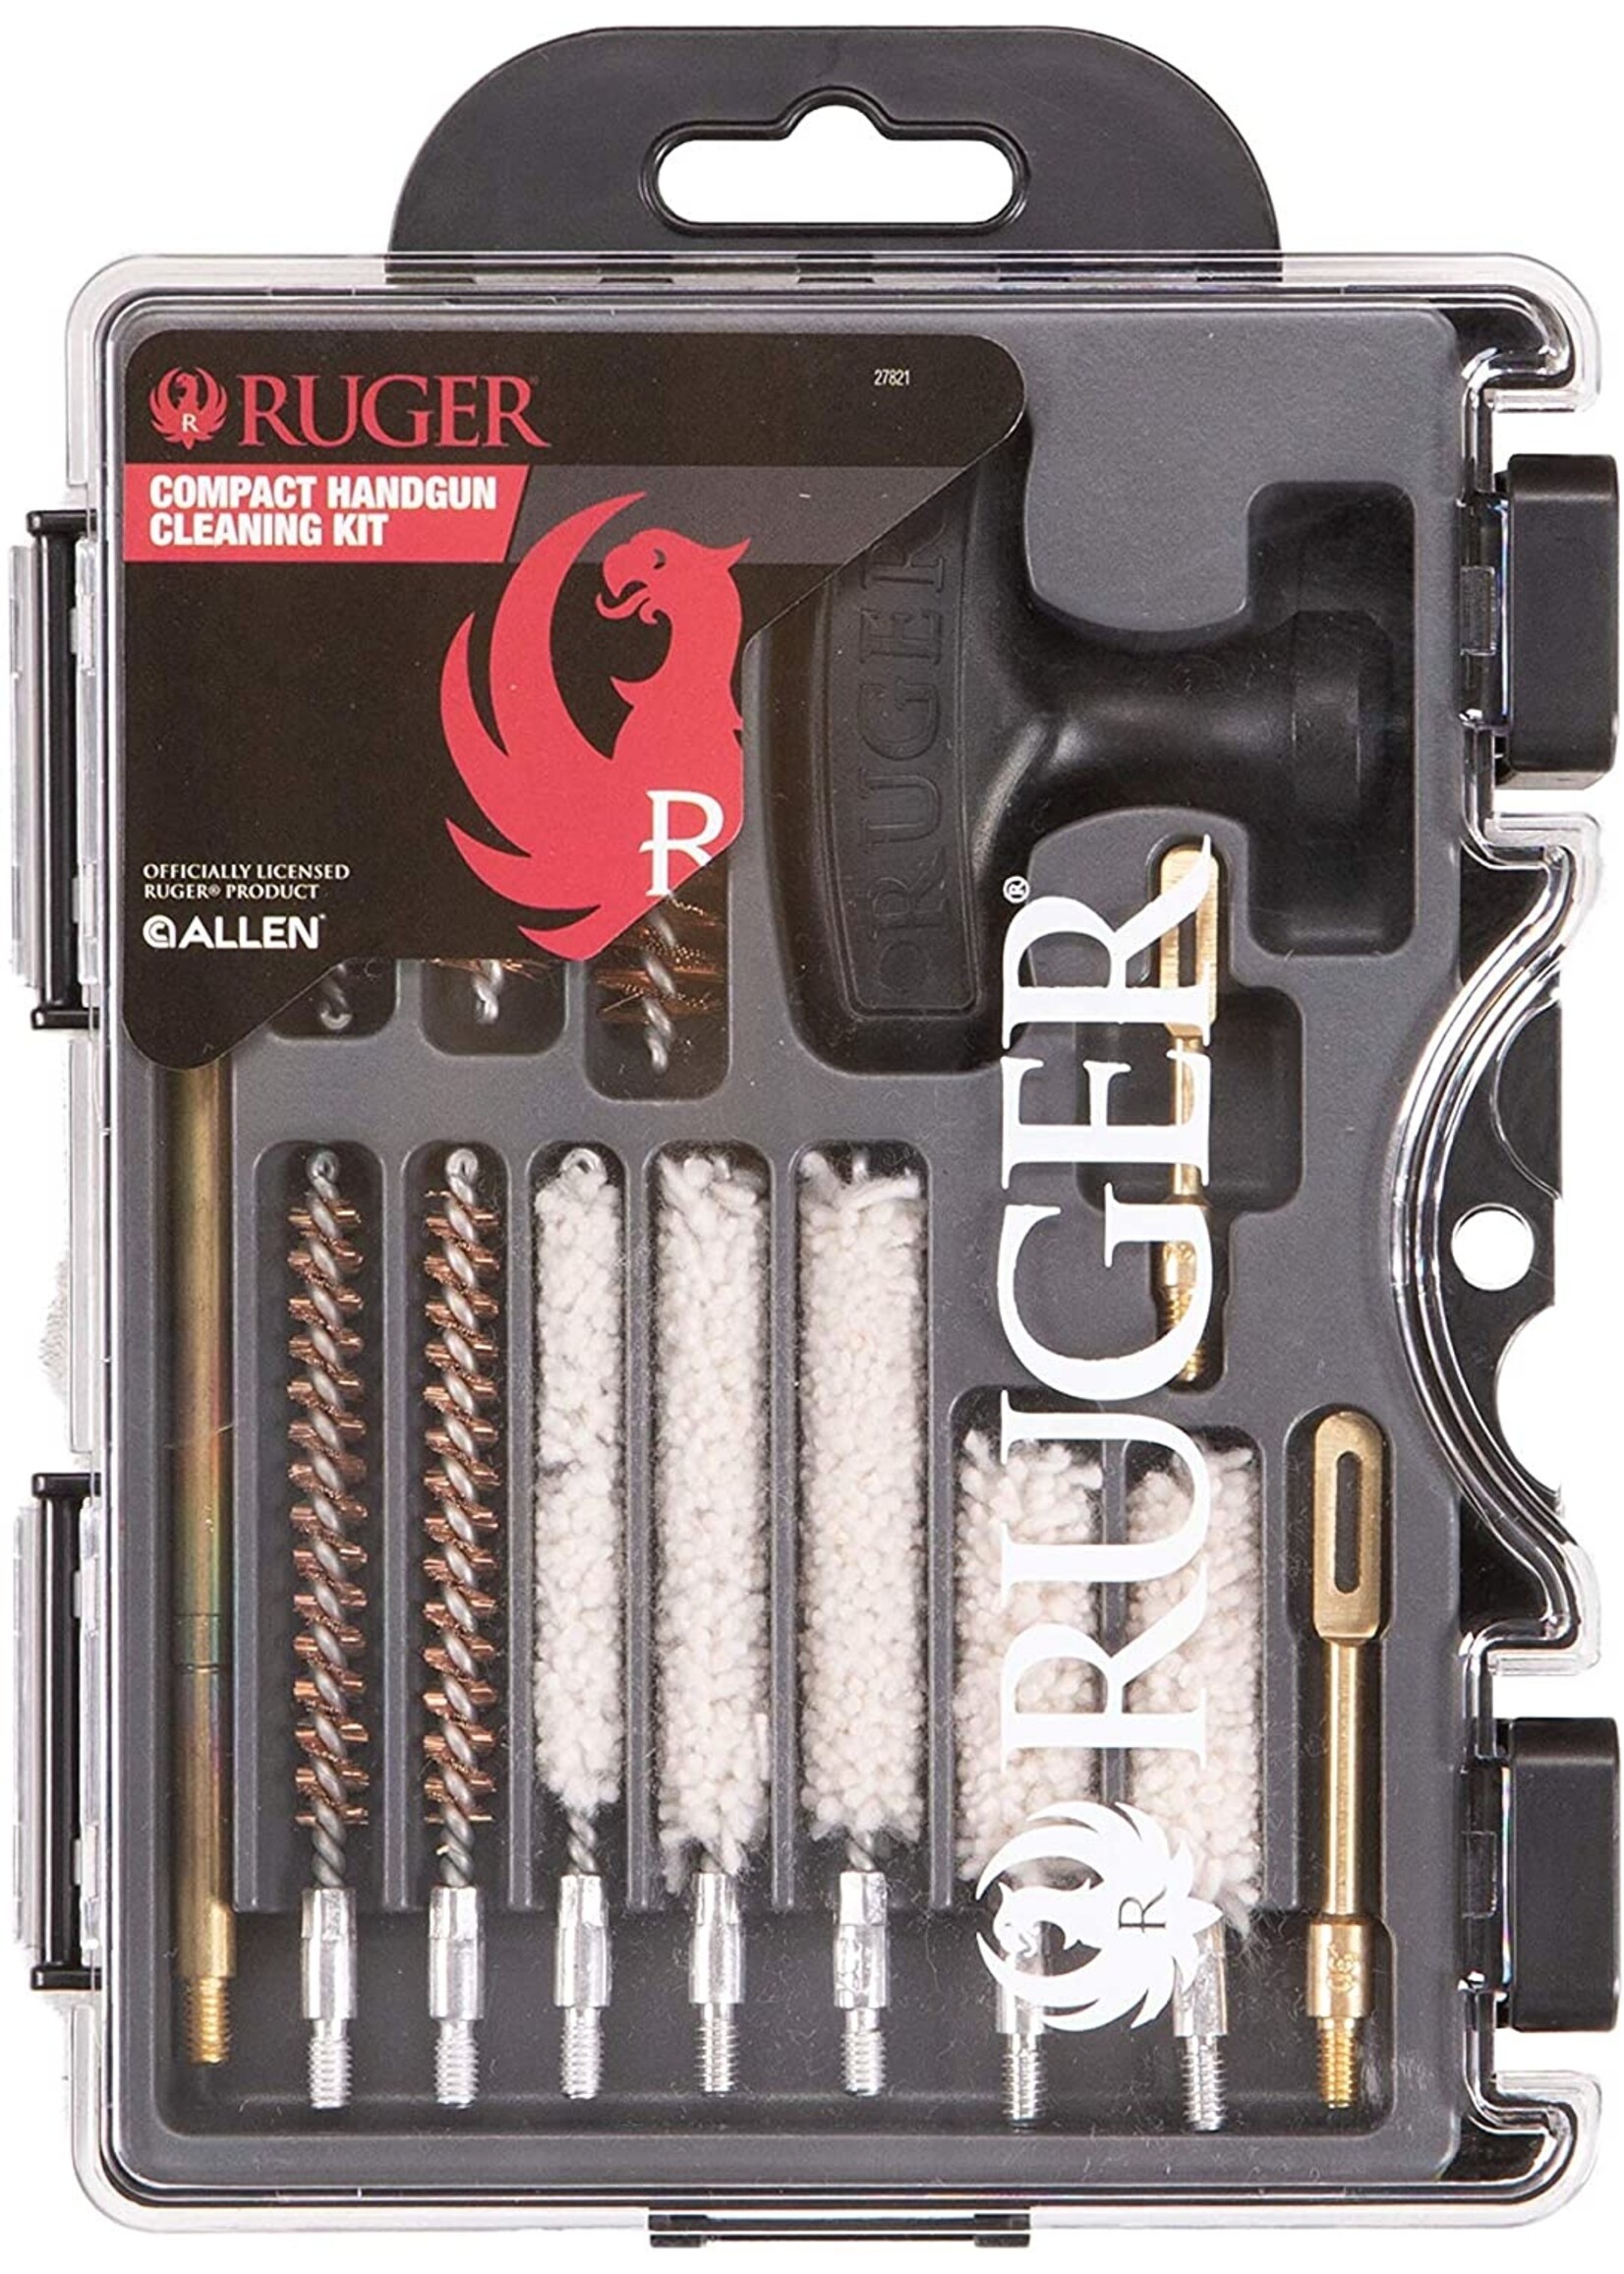 RUGER ALLEN RUGER COMPACT HANDGUN CLEANING KIT